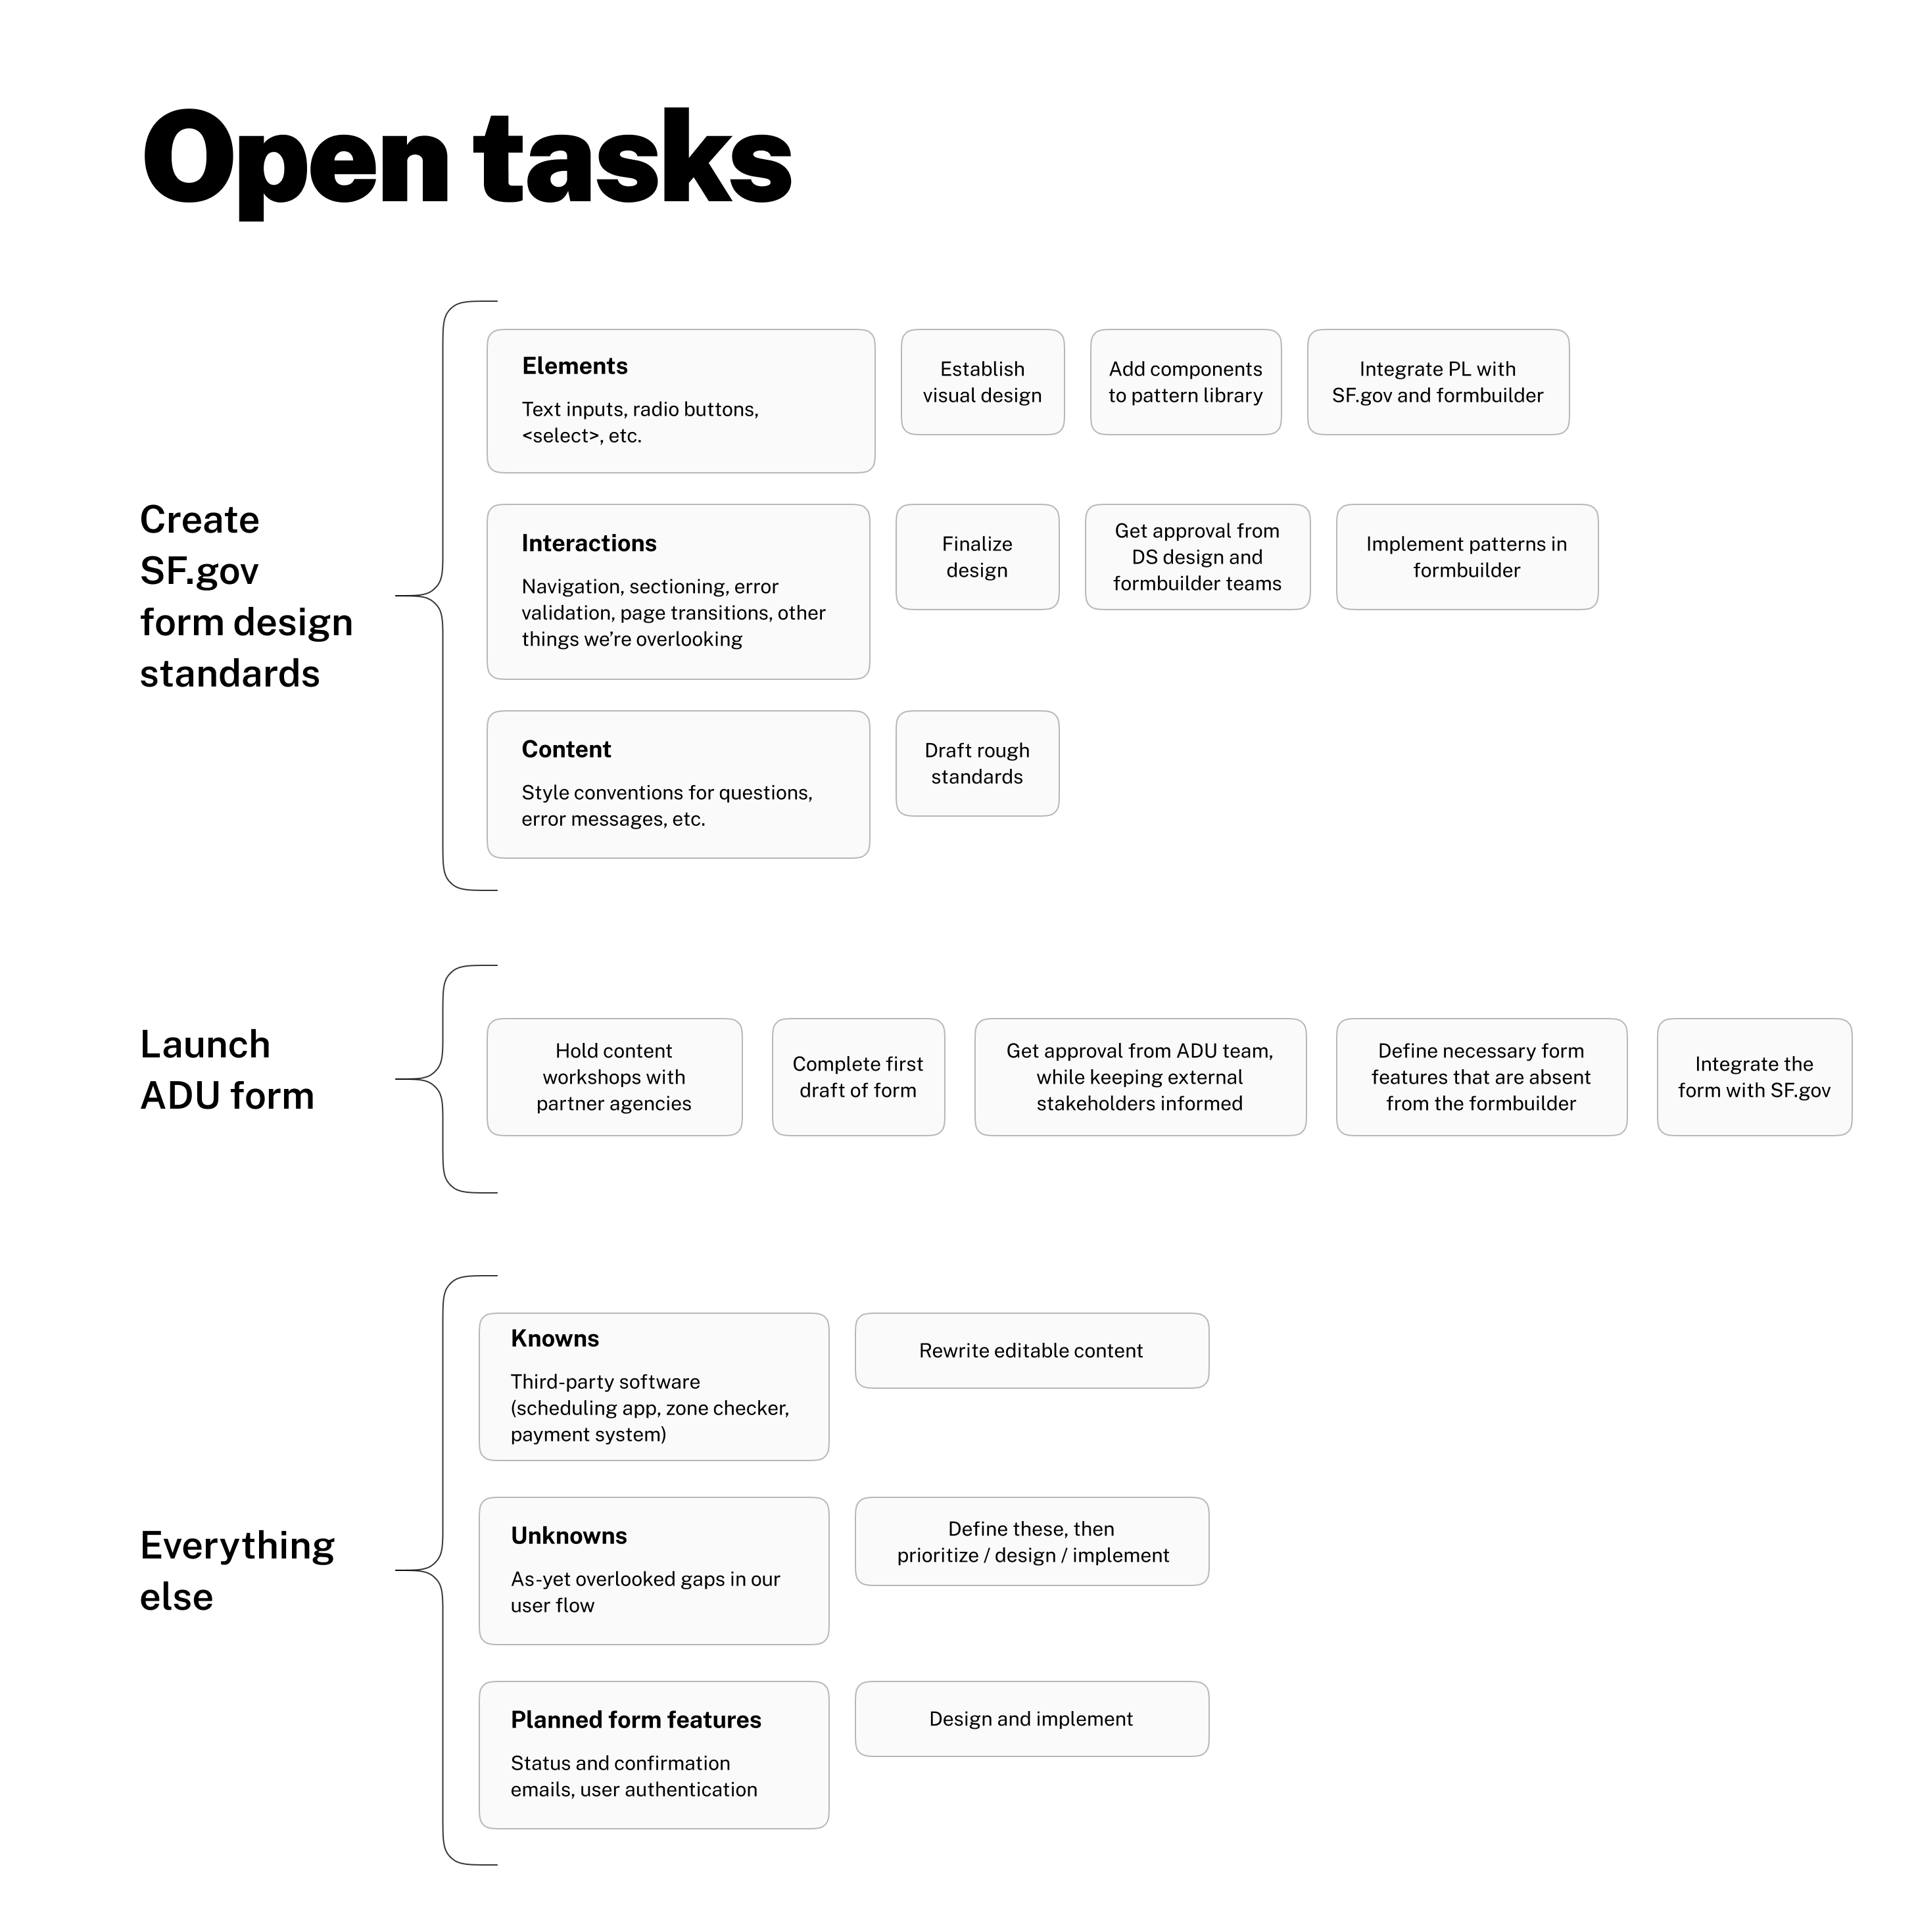 An outline of open tasks.